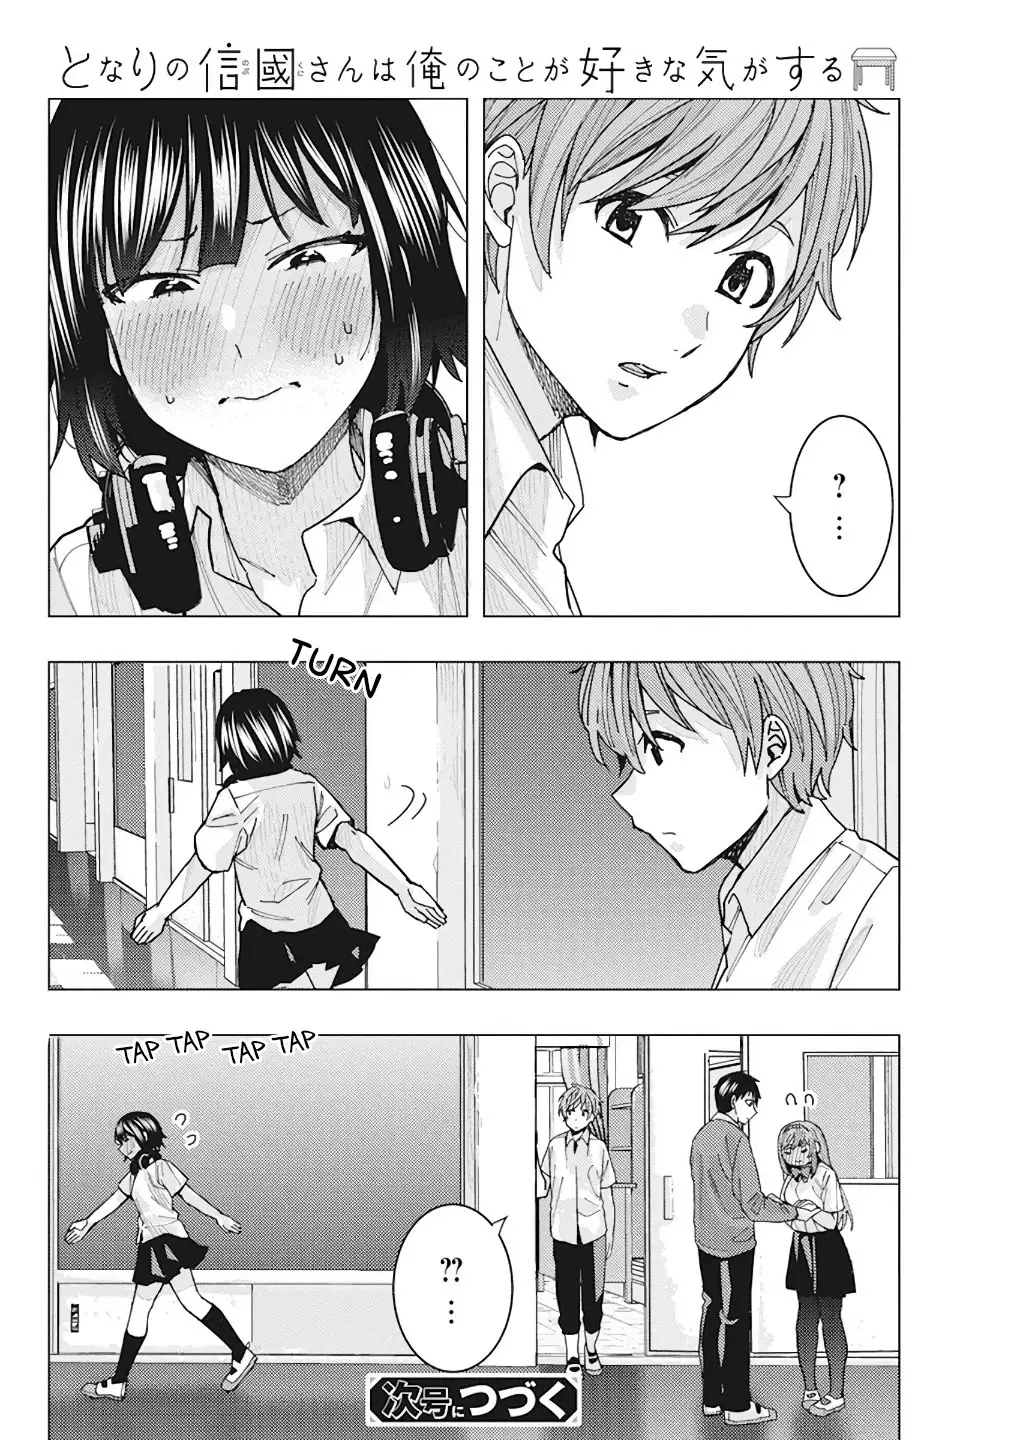 "nobukuni-San" Does She Like Me? - 13 page 16-de881d84